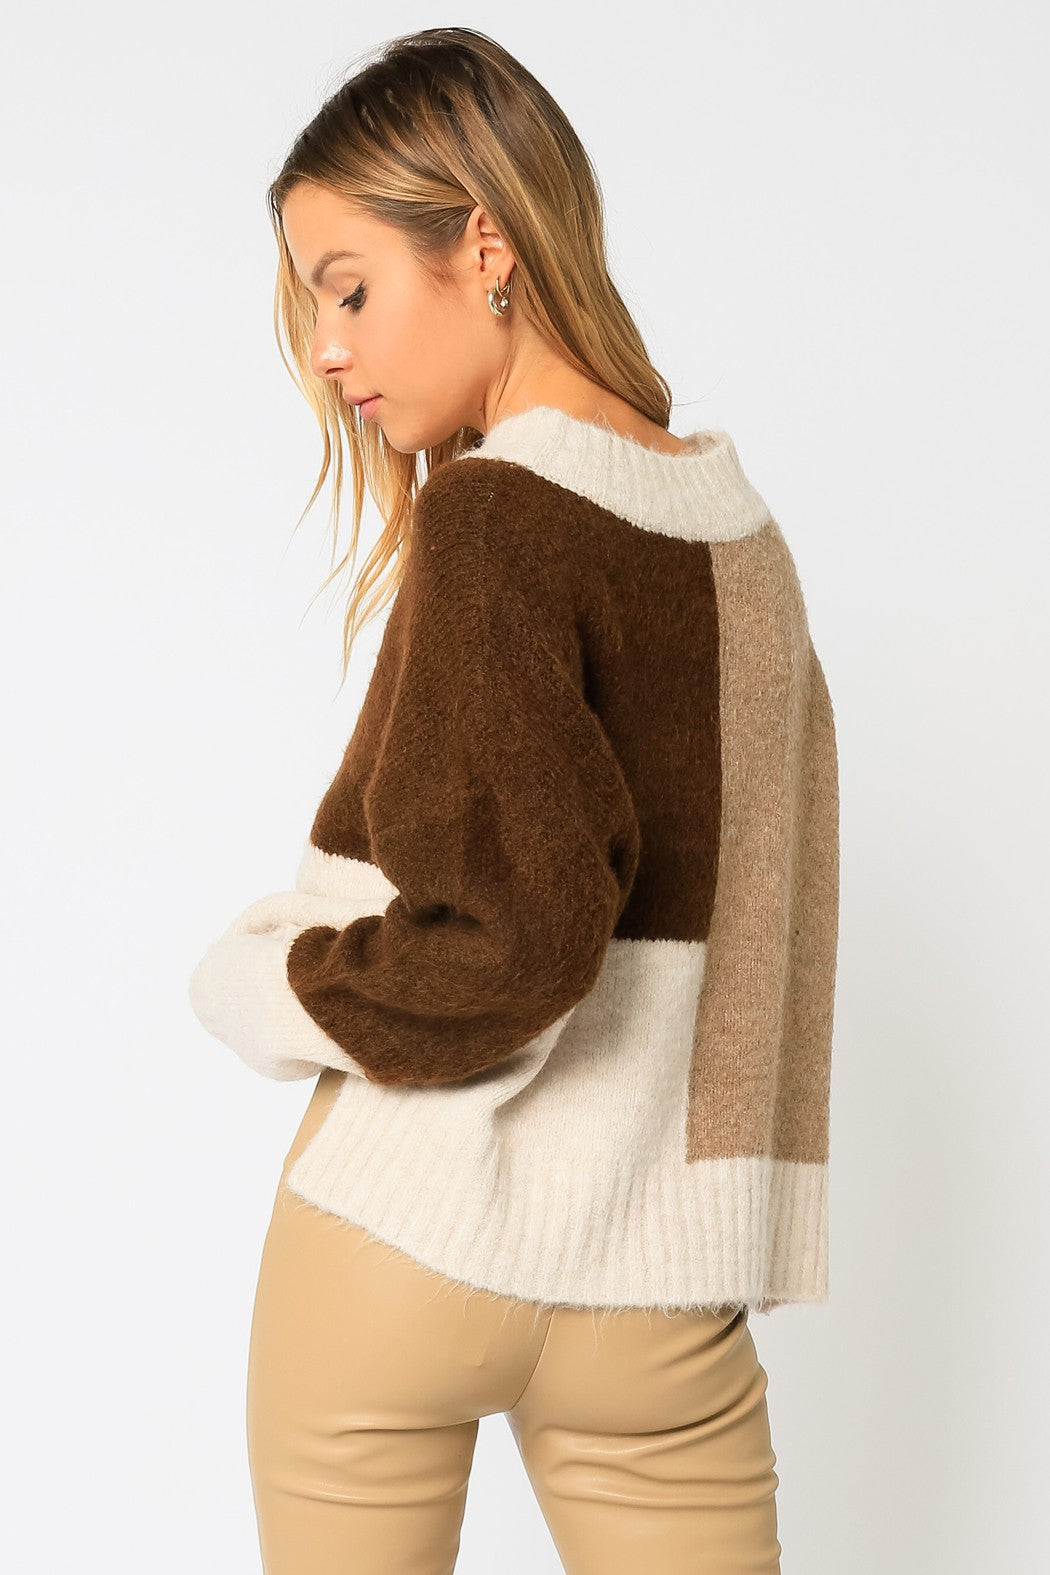 Rayleigh Sweater